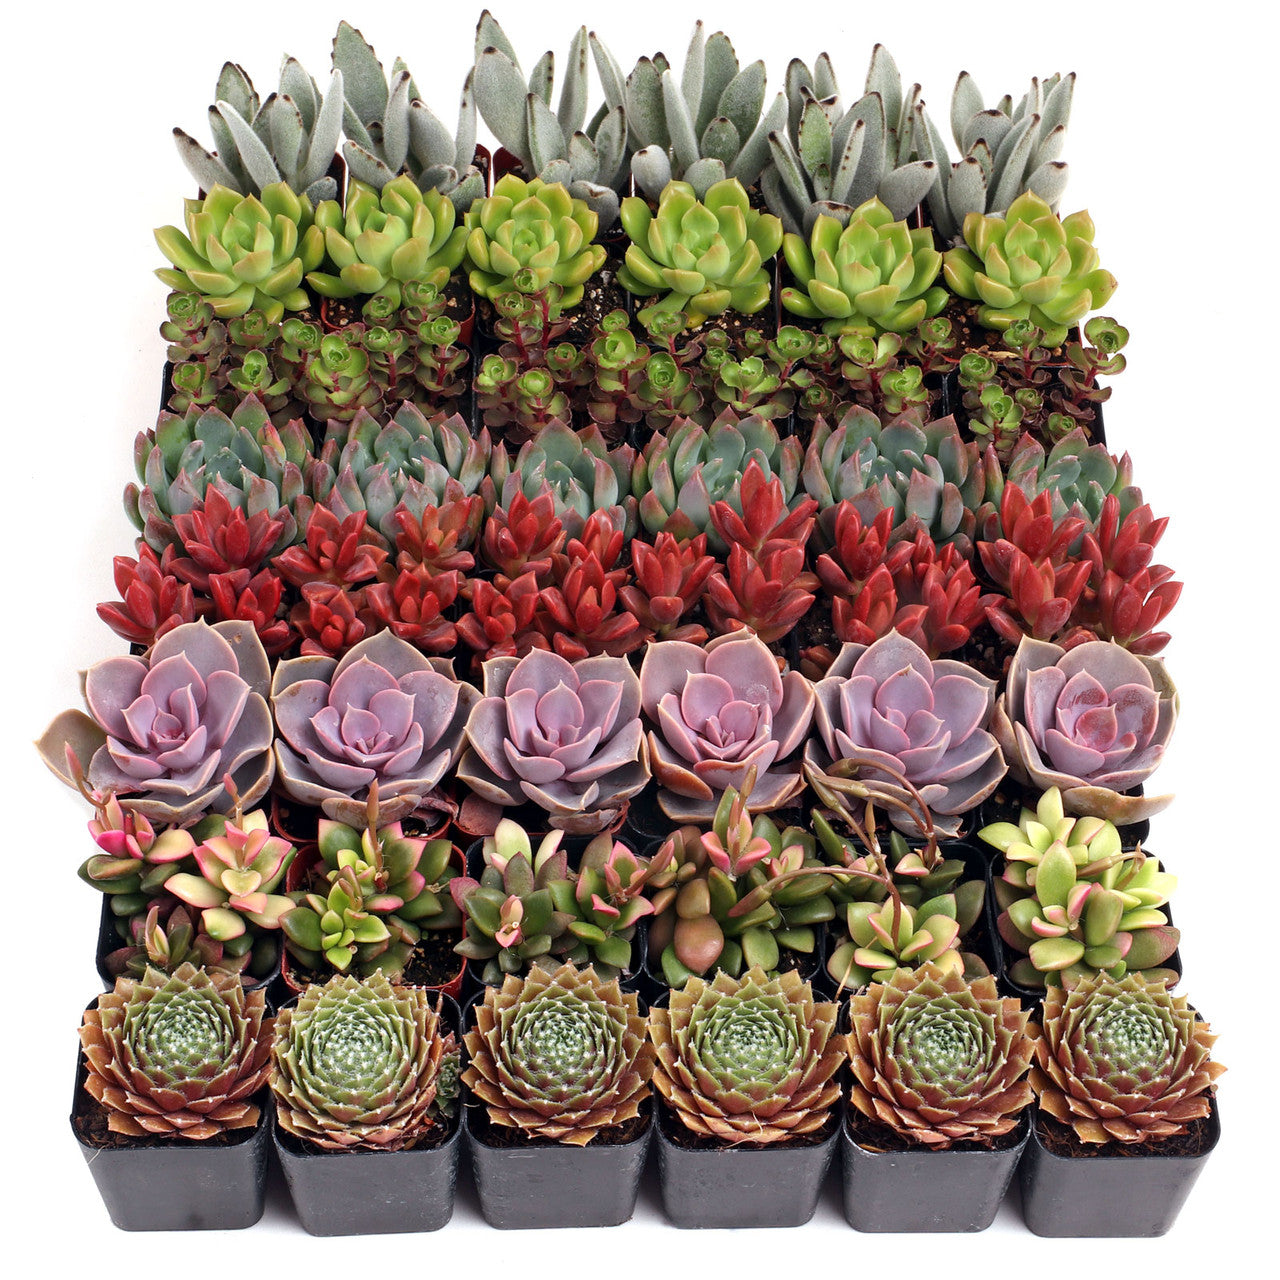 Assorted Succulents 48-Pack - 8 Varieties - 2"